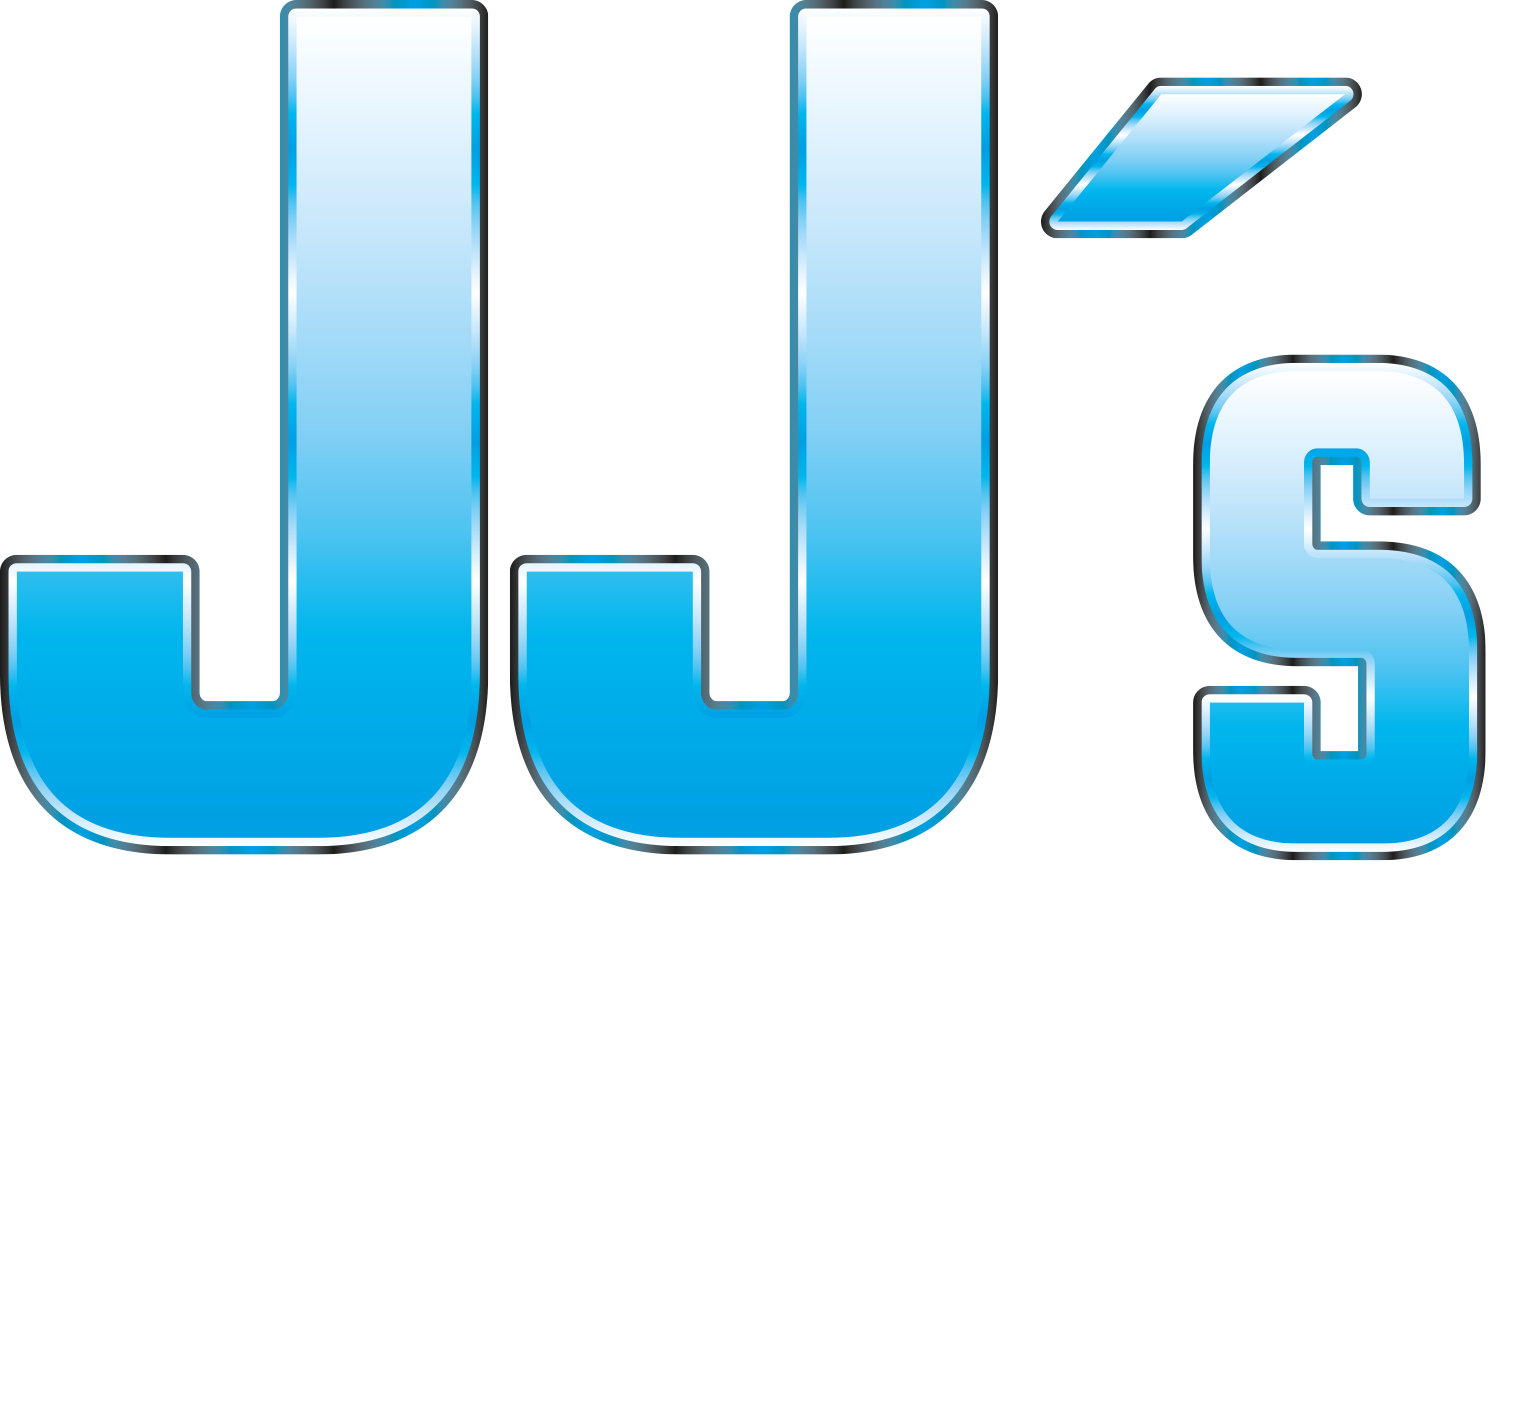 JJBYGGABsvart9978